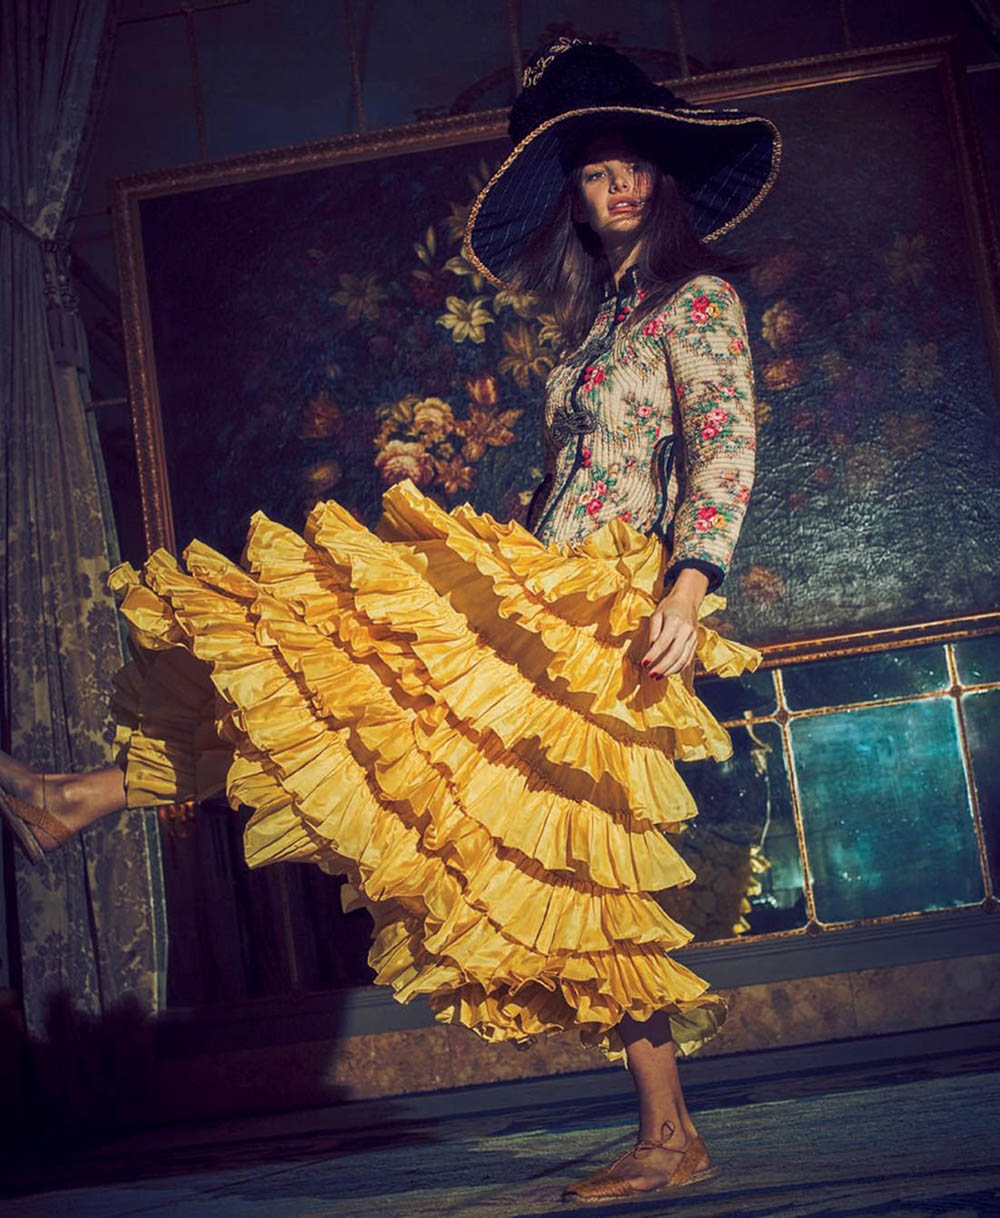 Ophelie Guillermand covers Harper’s Bazaar Spain April 2018 by Guy Aroch